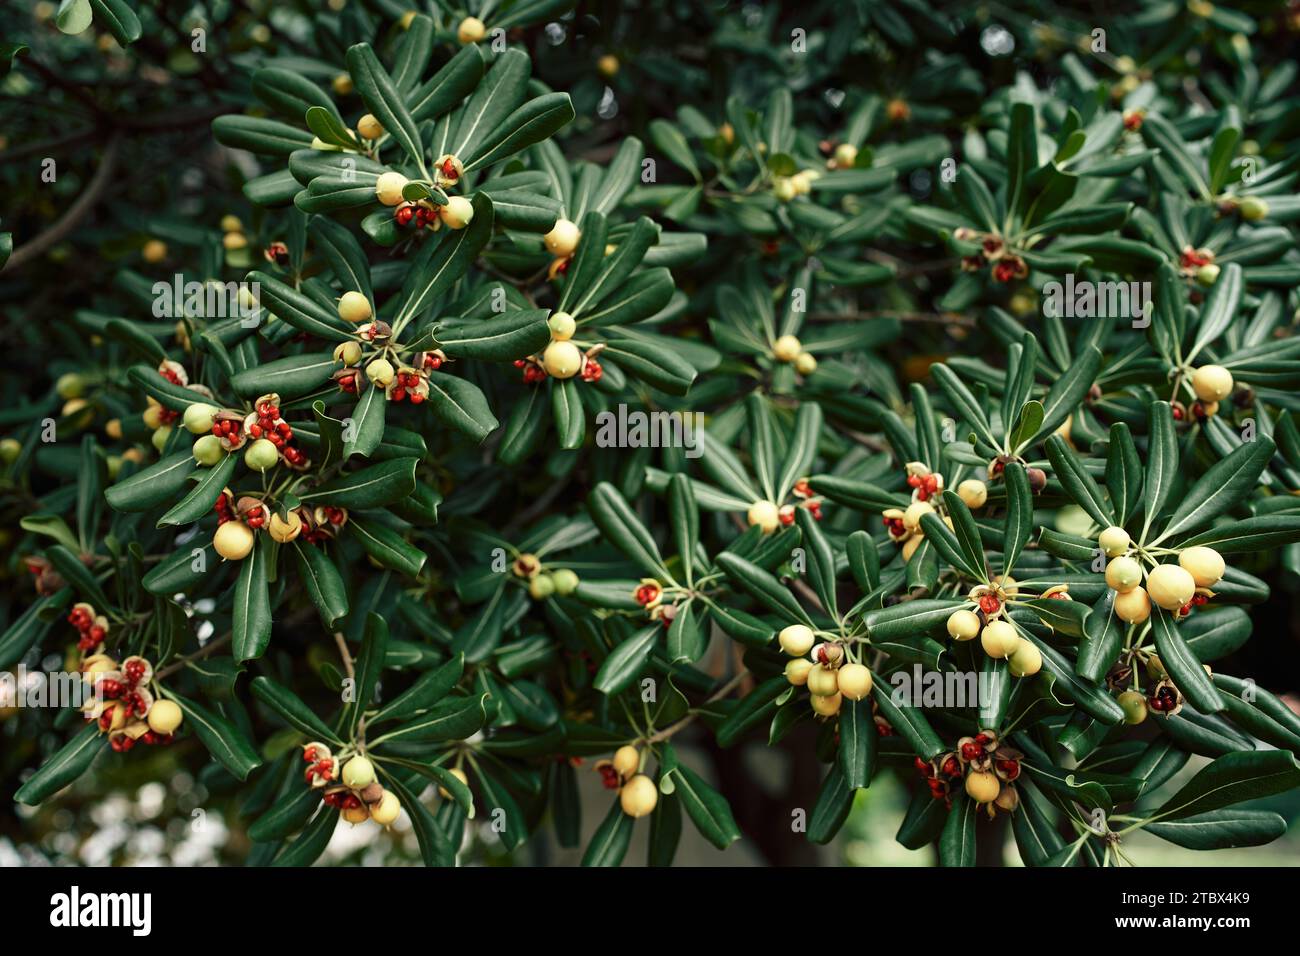 Yellow seed pods among the green foliage of the mock orange bush Stock Photo